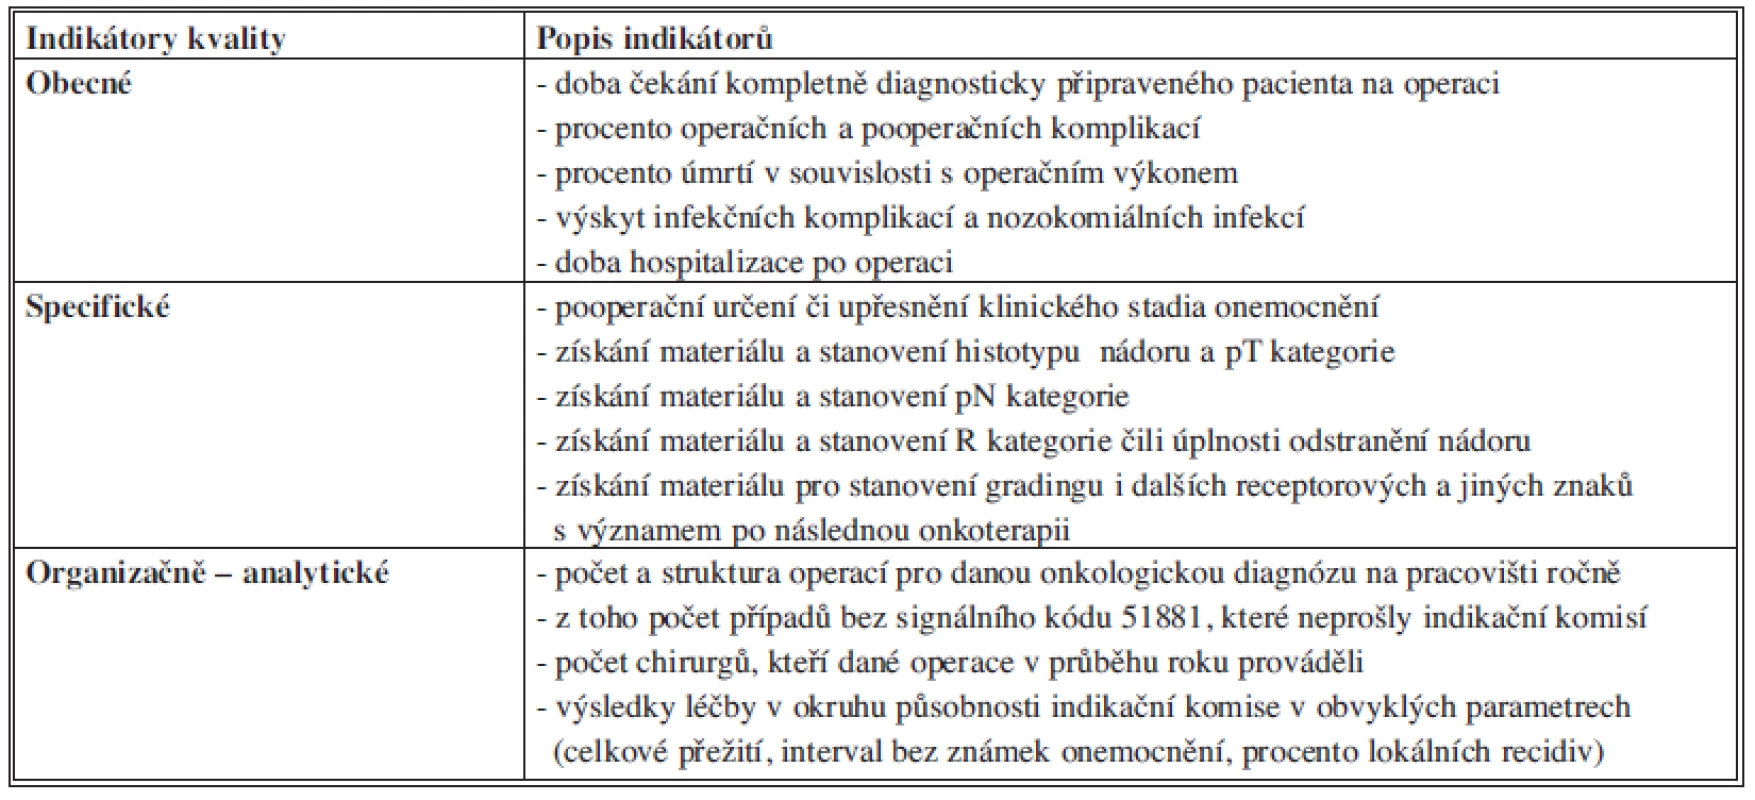 Indikátory pro hodnocení onkochirurgické péče
Tab. 2: Indicators for the evaluation of oncosurgical care